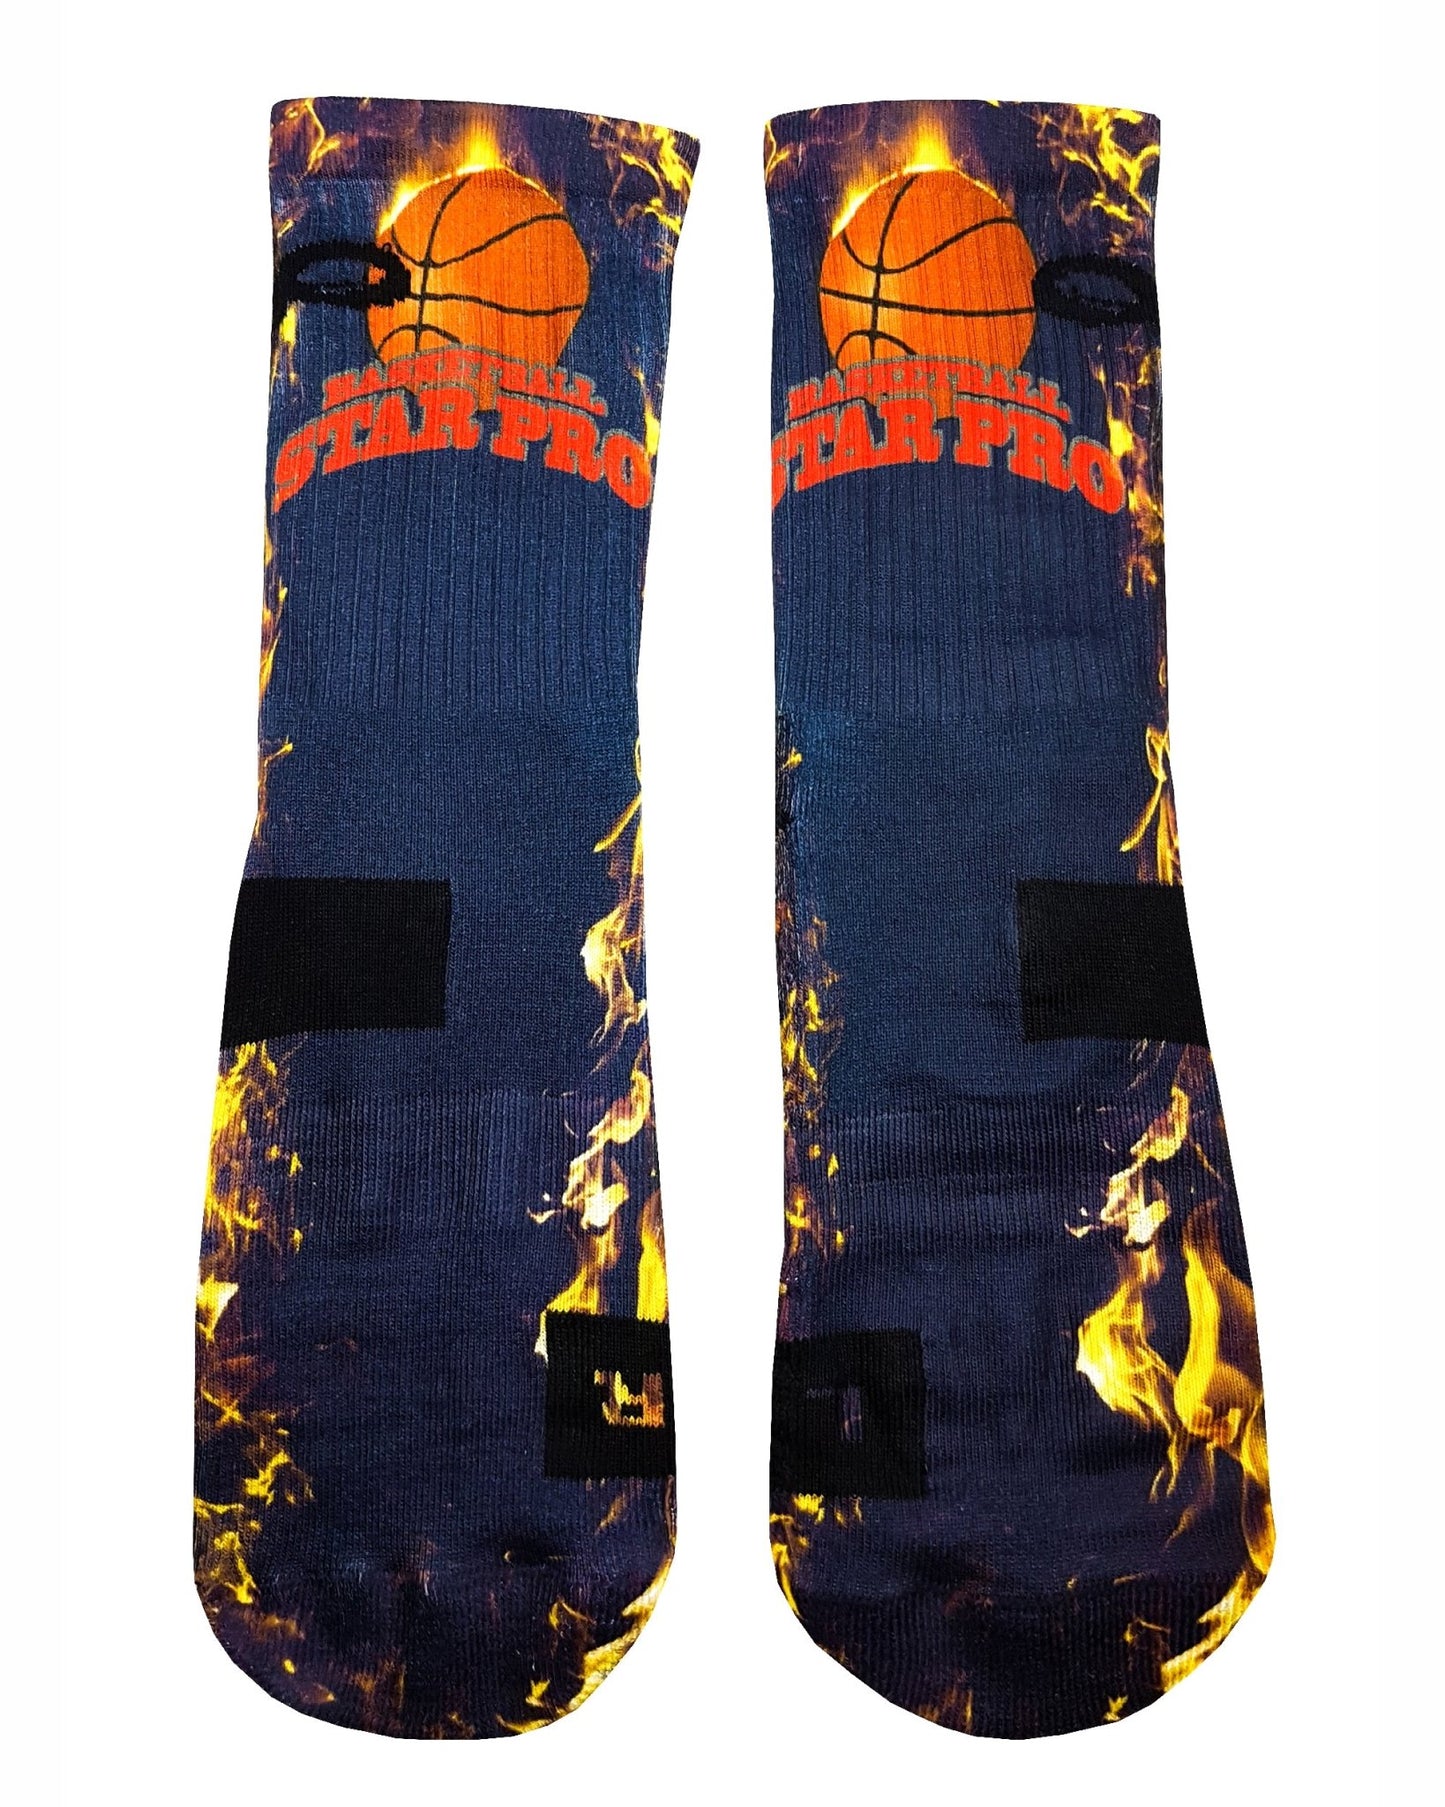 Basketball Star PRO Style Socken